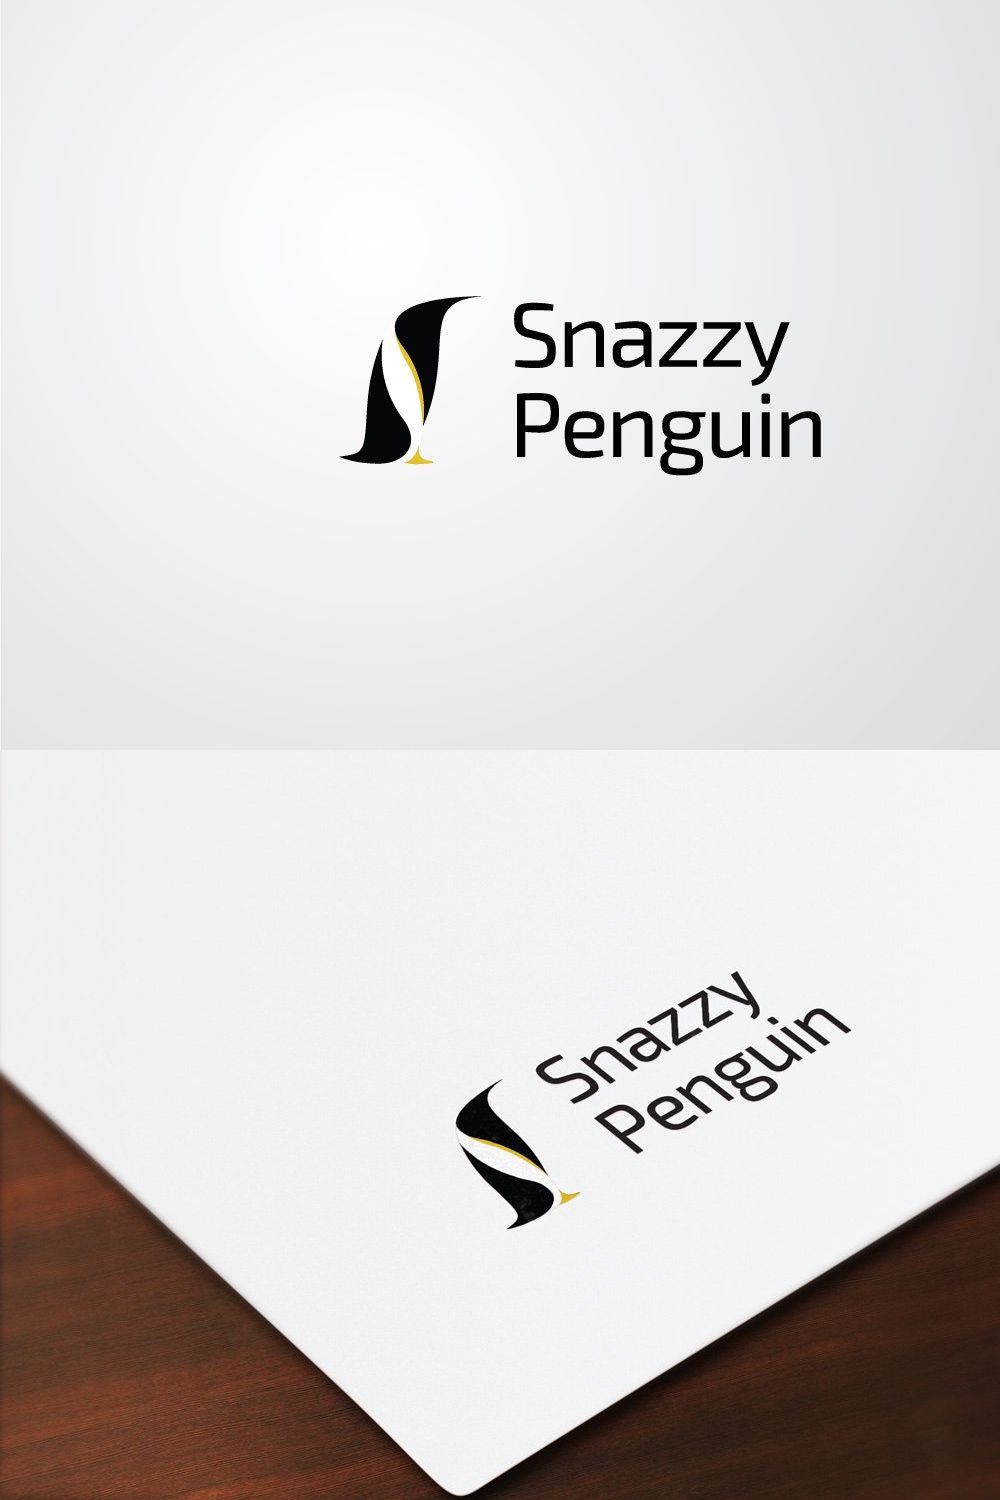 Snazzy Penguin | Vector Logo pinterest preview image.